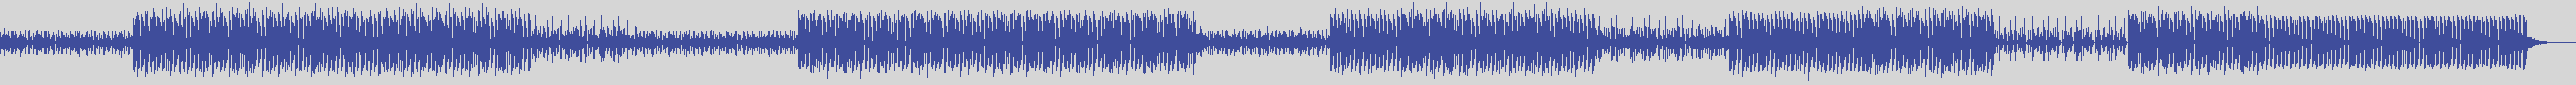 nf_boyz_records [NFY010] Paul Catchy - Narabay [Extended Mix] audio wave form